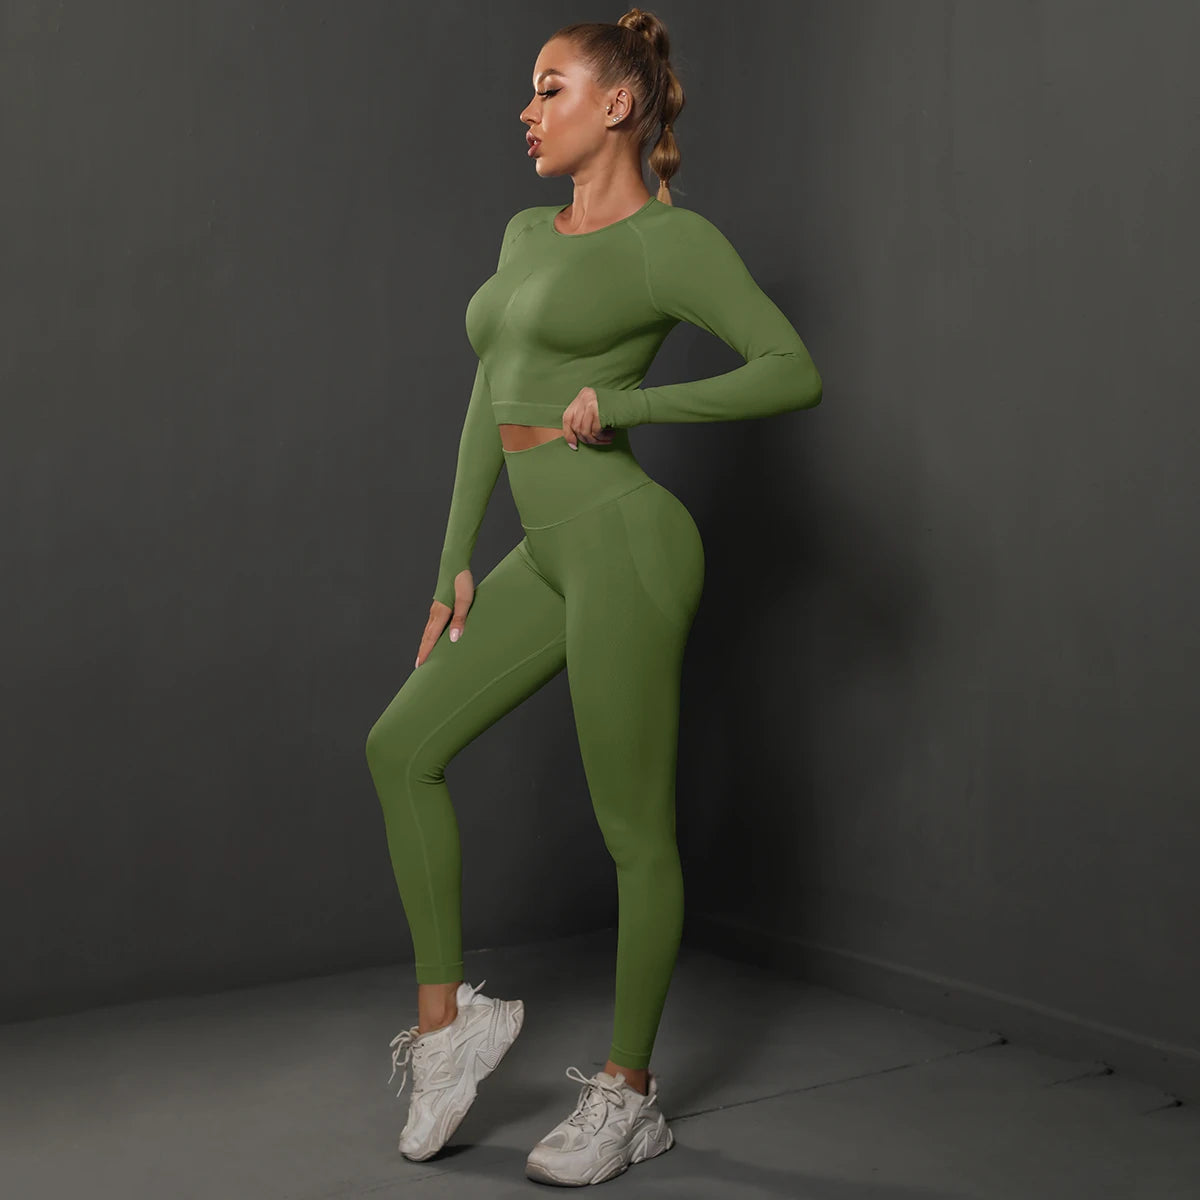 SORTYGO - ZenFlow Seamless Yoga Set in Army Green